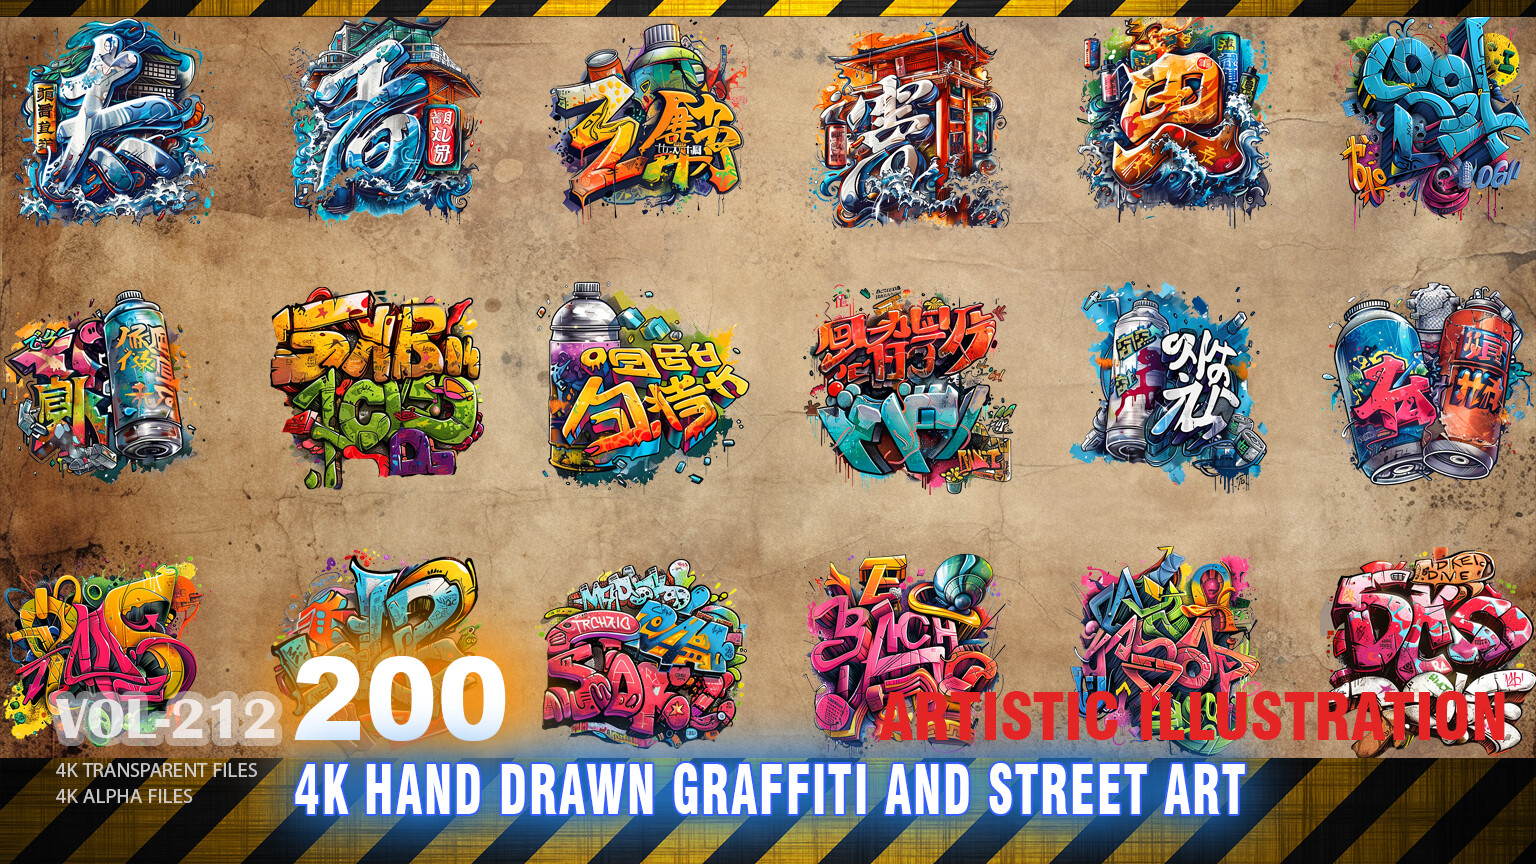 ArtStation - 200 4K HAND DRAWN GRAFFITI AND STREET ART - ARTISTIC 